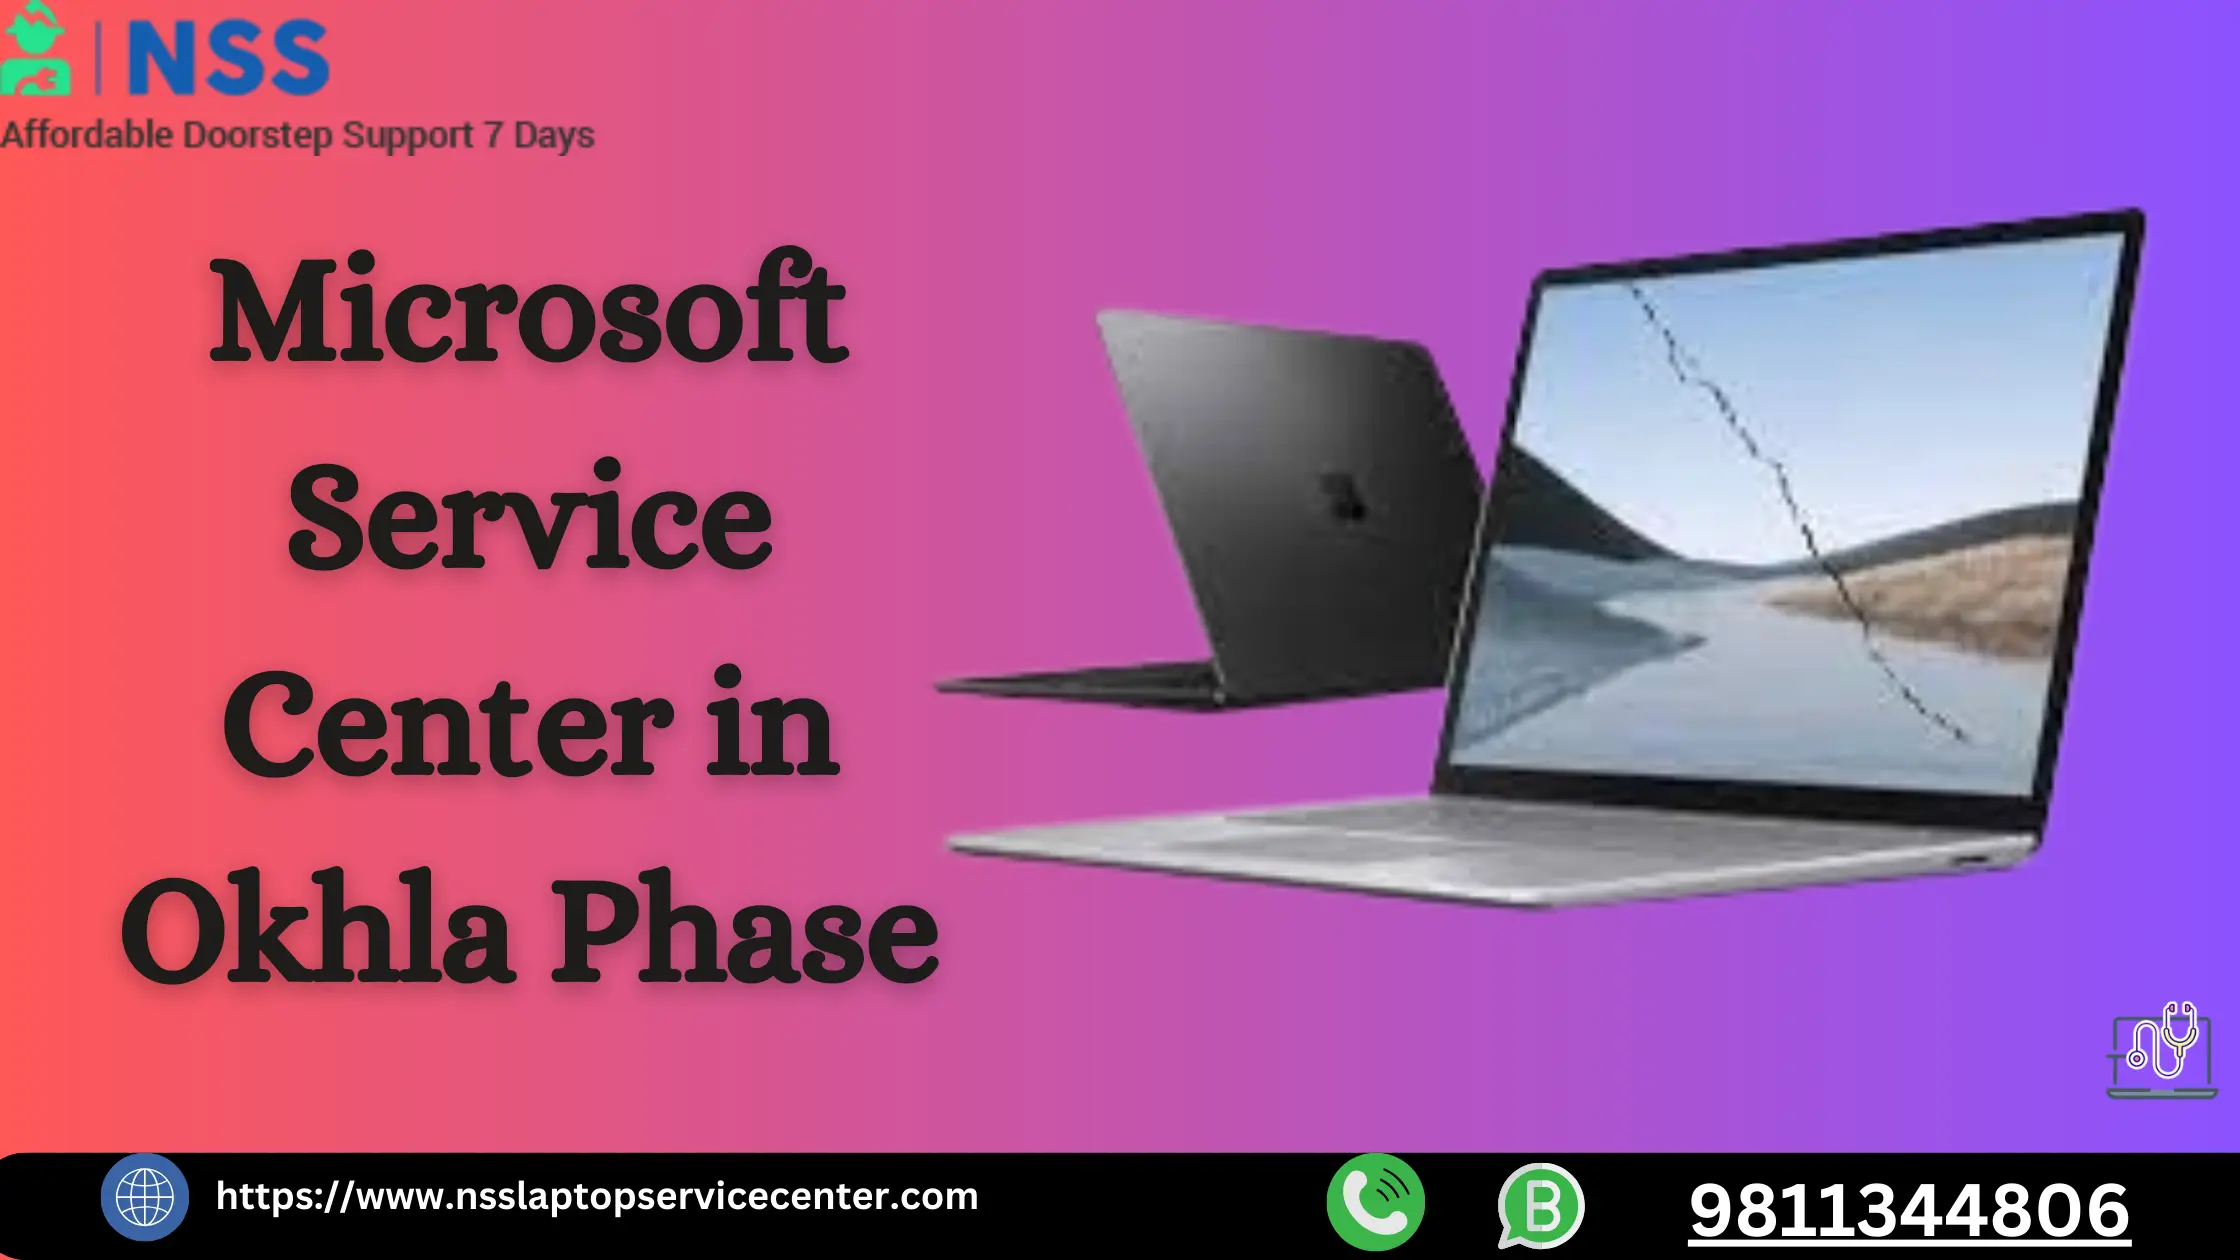 Microsoft Service Center in Okhla Phase Near Delhi